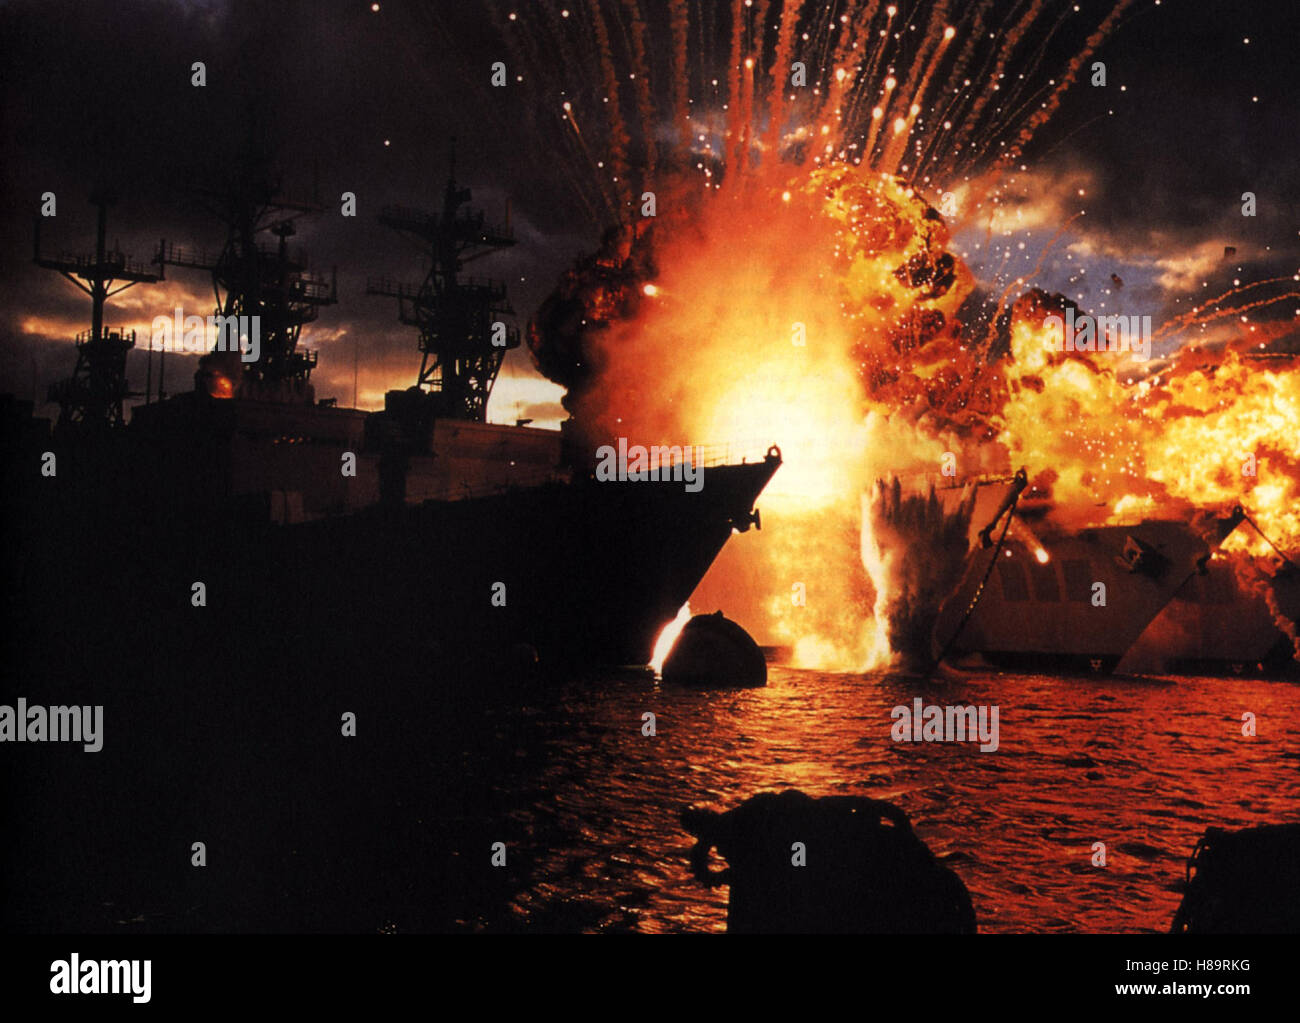 Pearl Harbor, (PEARL HARBOR) USA 2001, Regie: Michael Bay, Szene, Stichwort: Krieg, Flammen, Explosion, Schiff Stock Photo